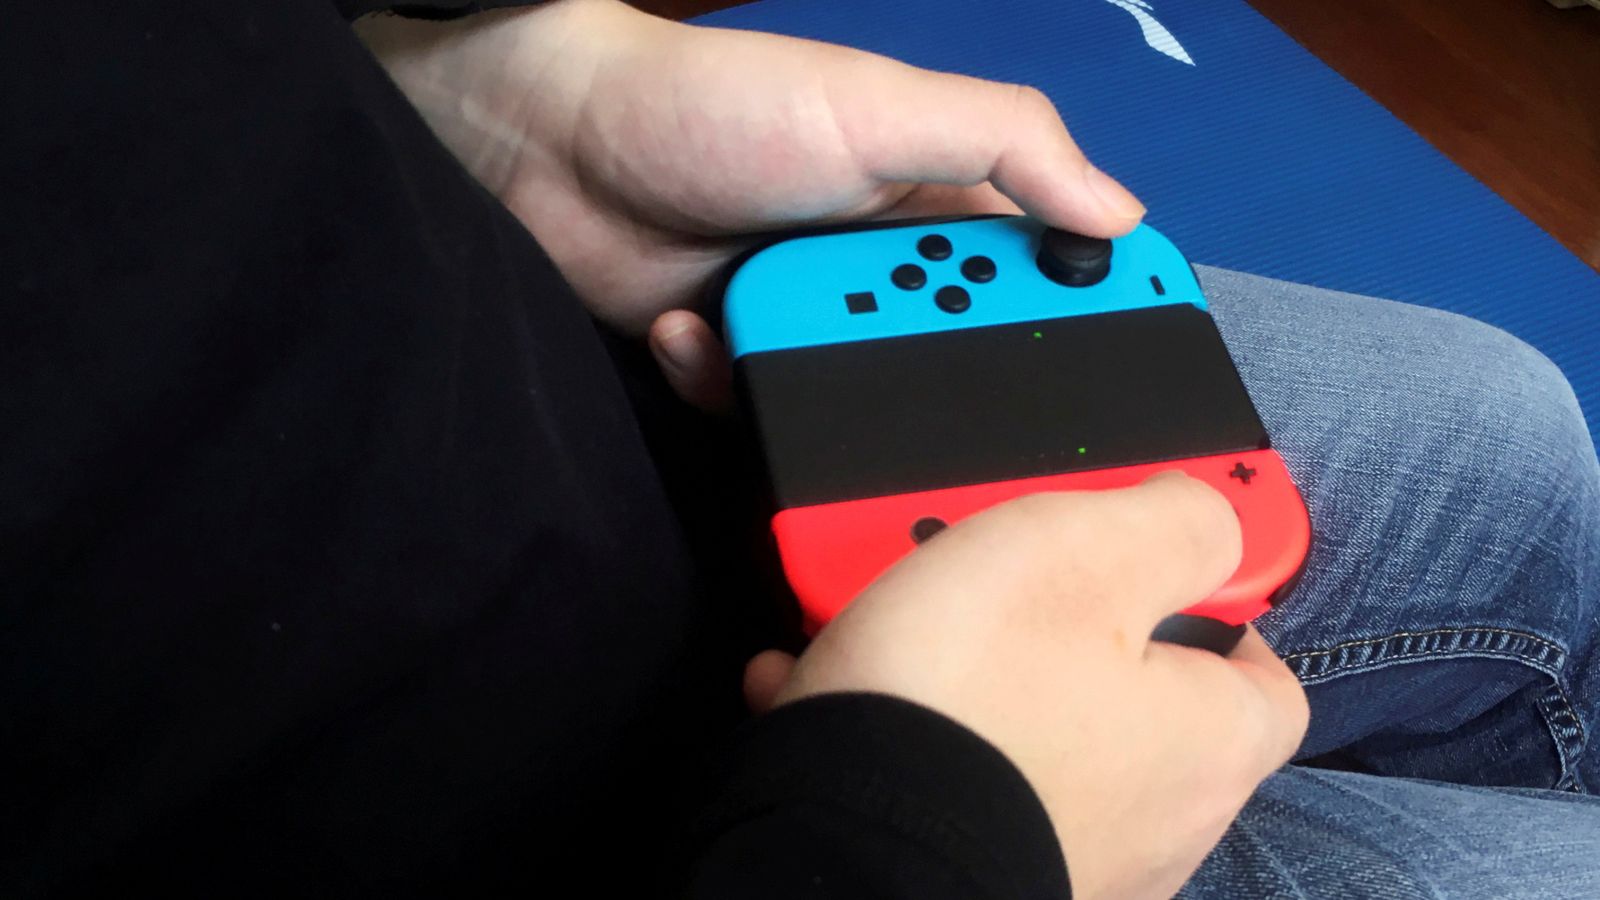 Nintendo didesak untuk meluncurkan penyelidikan atas masalah “melayang” yang memengaruhi pengontrol Switch Joy-Con |  Berita sains dan teknologi